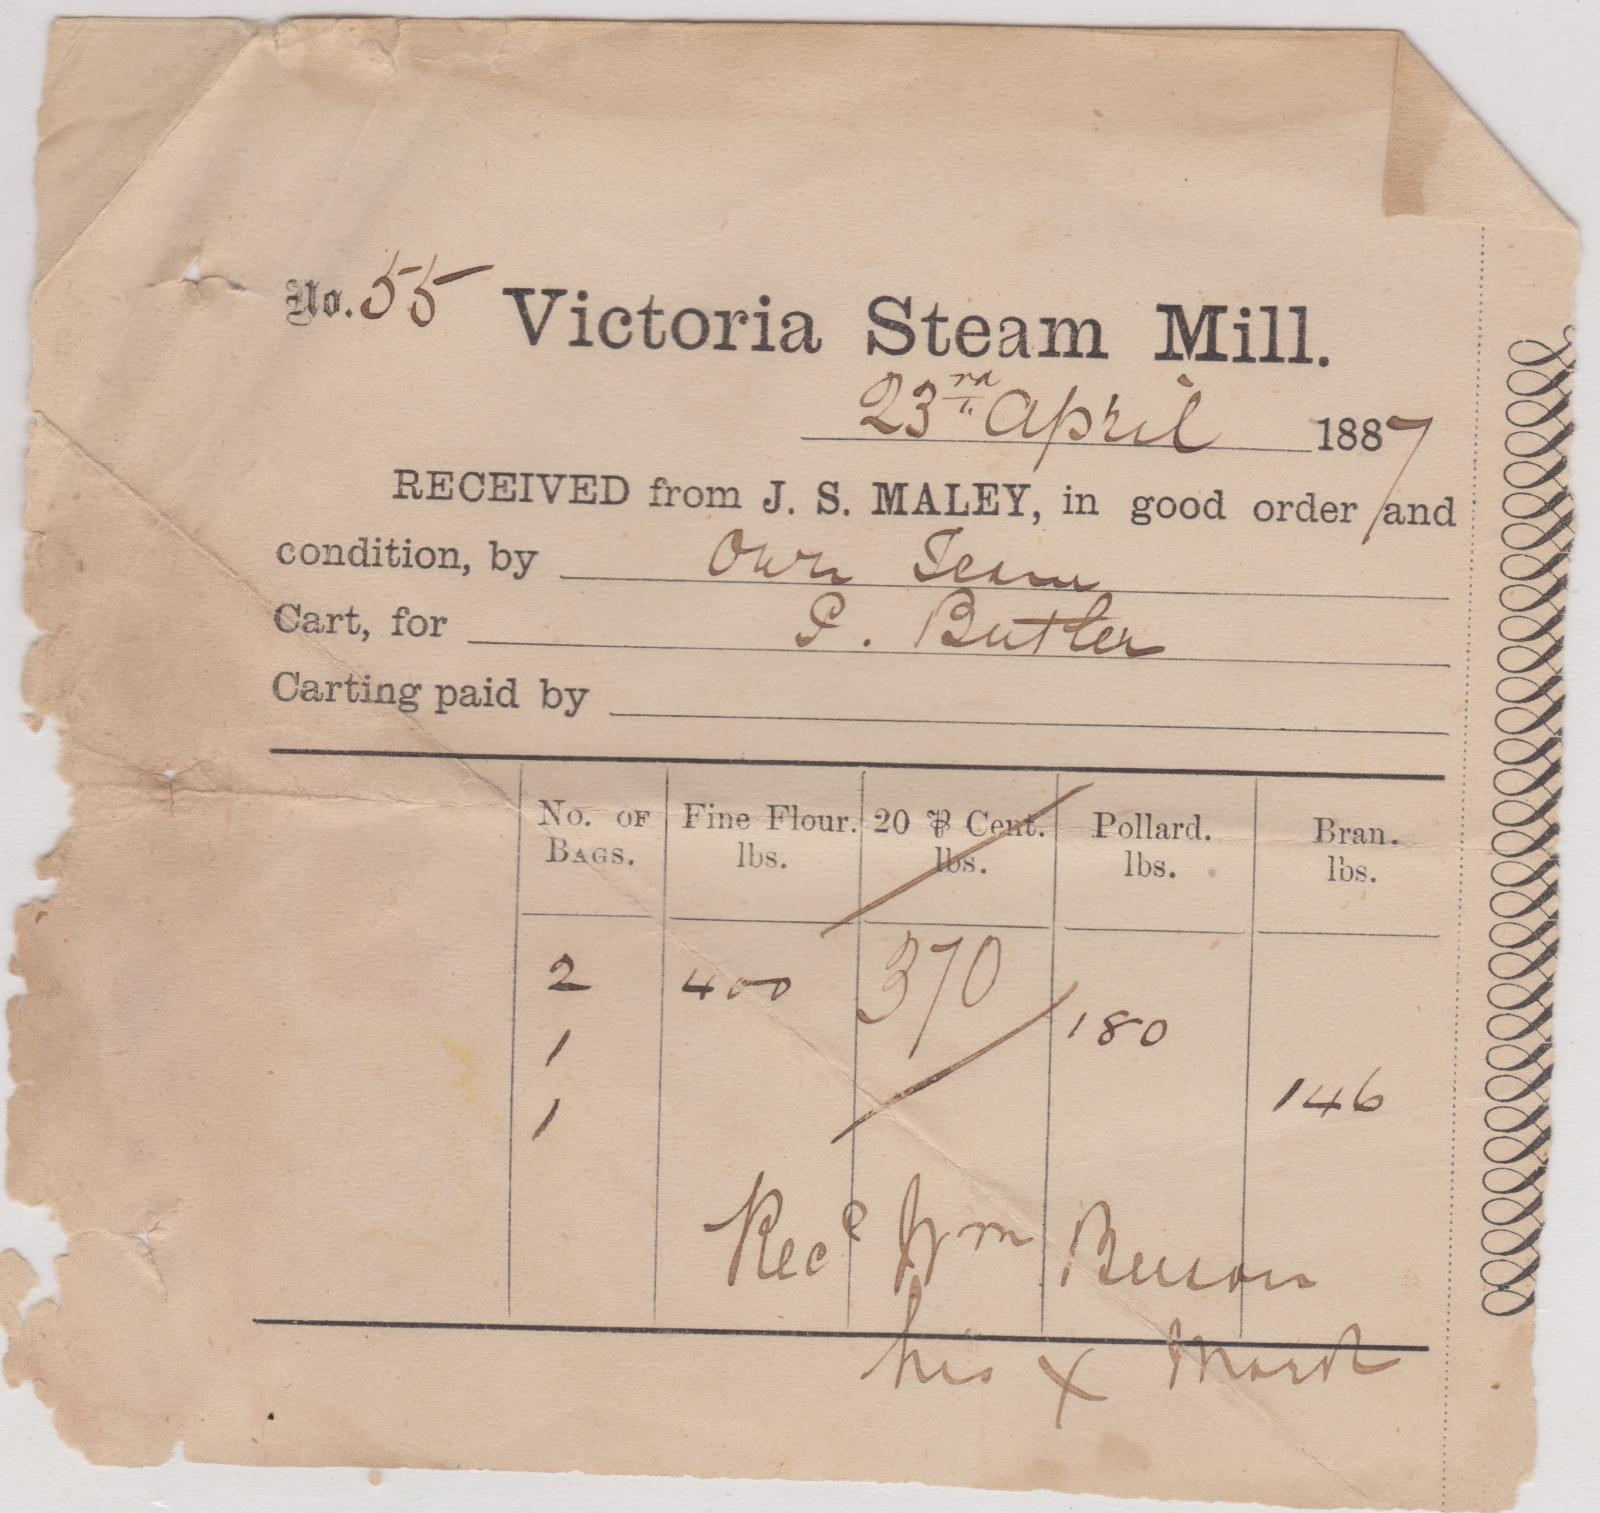 Victoria Steam Mill cart note no.55